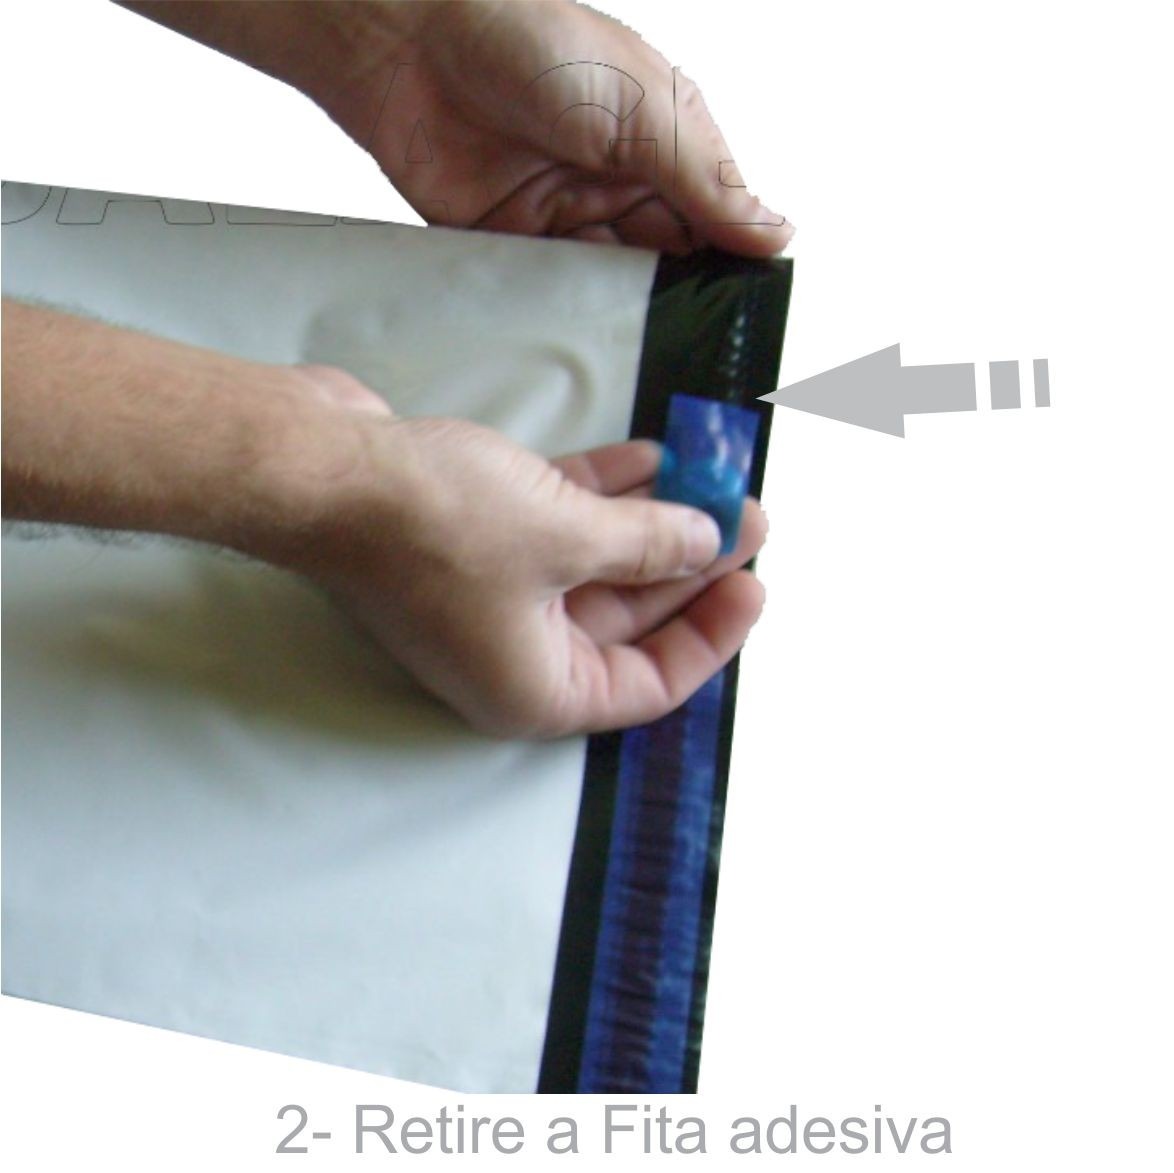 Envelope Plástico Segurança Lacre Tipo Sedex 40x50 (250Unidades ou 500Unidades)